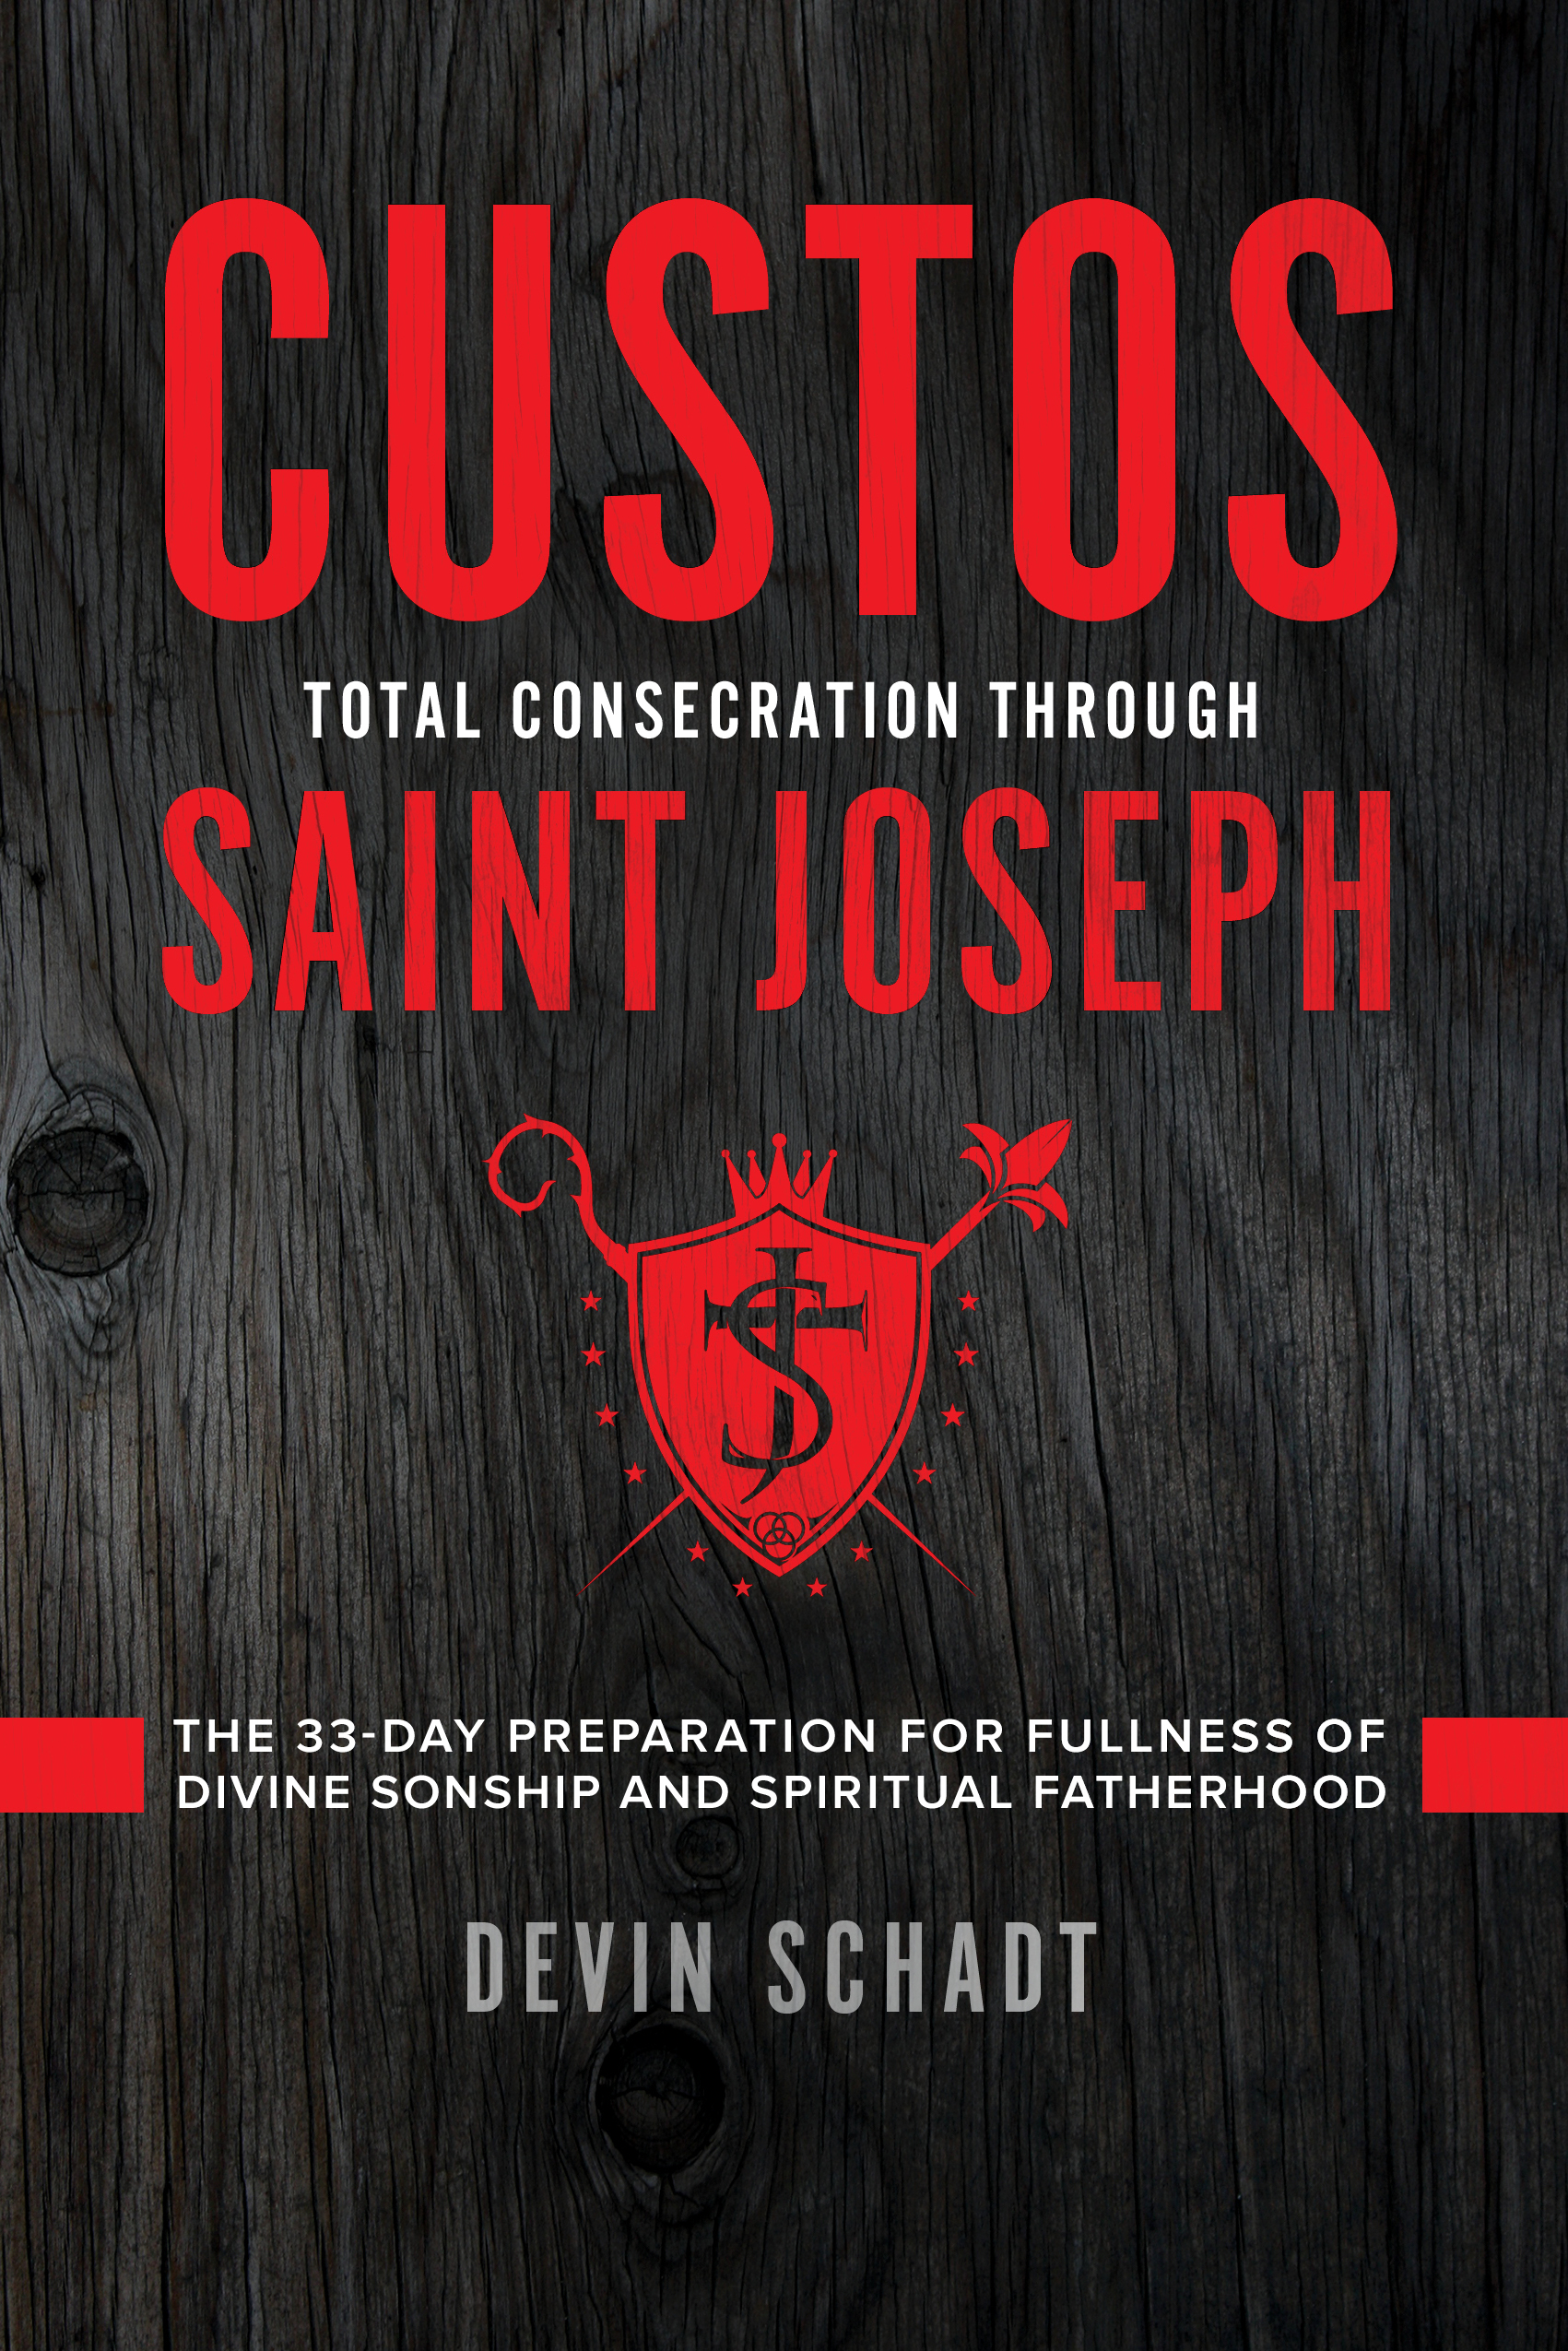 Custos Total Consecration through Saint Joseph / Devin Schadt